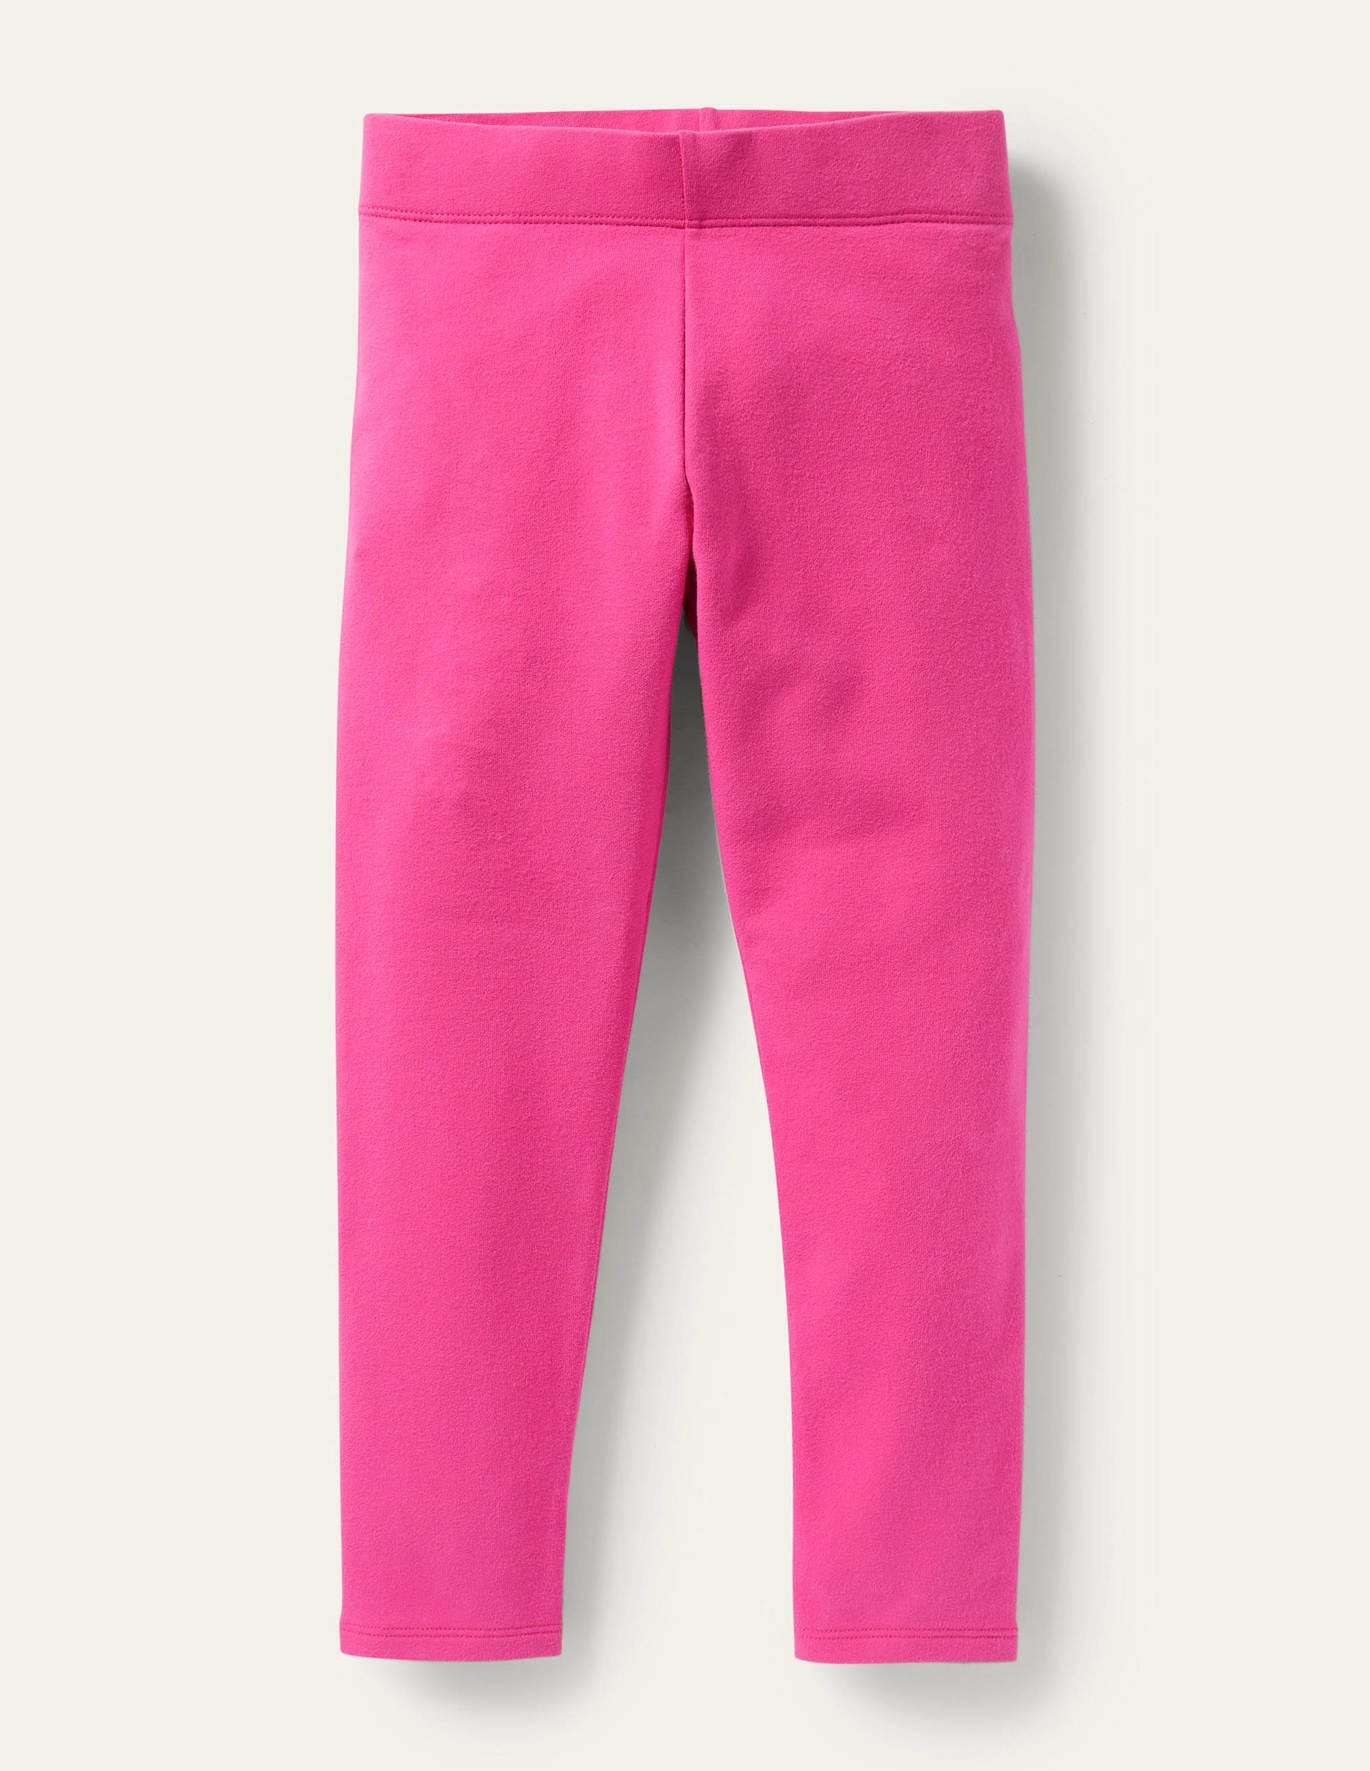 Boden Plain Cosy Leggings - Tickled Pink